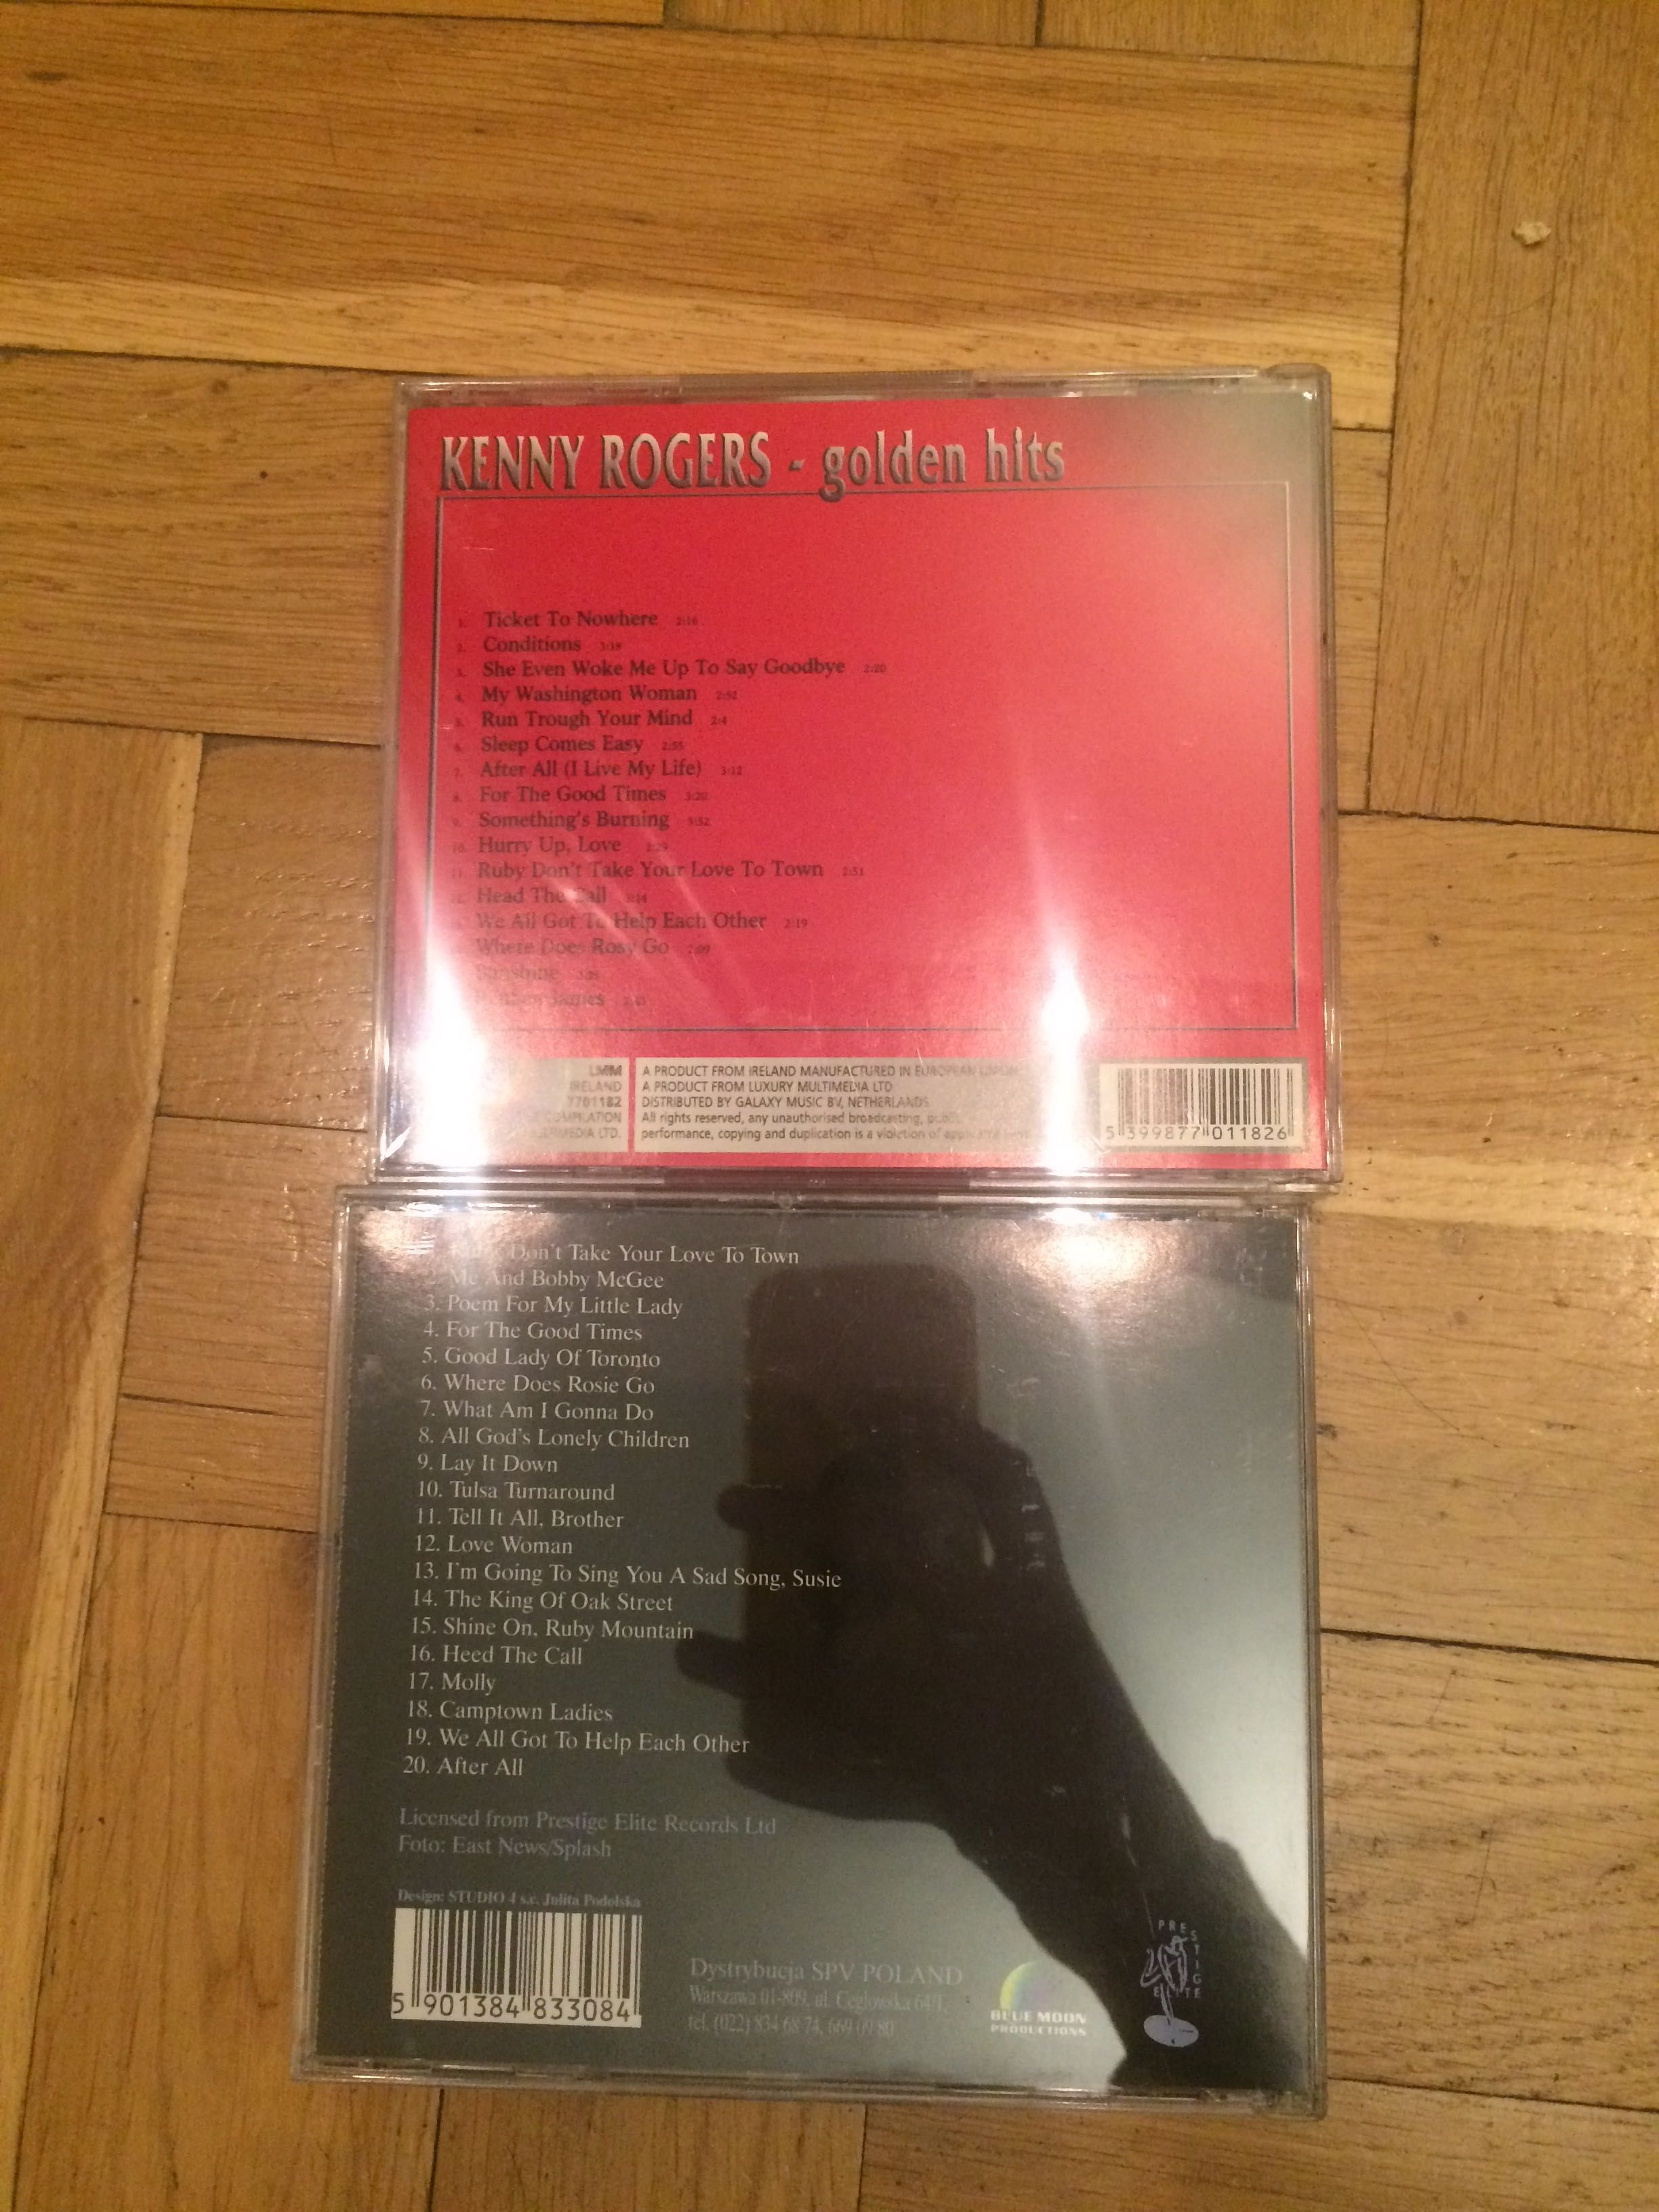 Kenny Rogers 2 CD Golden Hits Me and Bobby McGee zestaw wyprzedaz